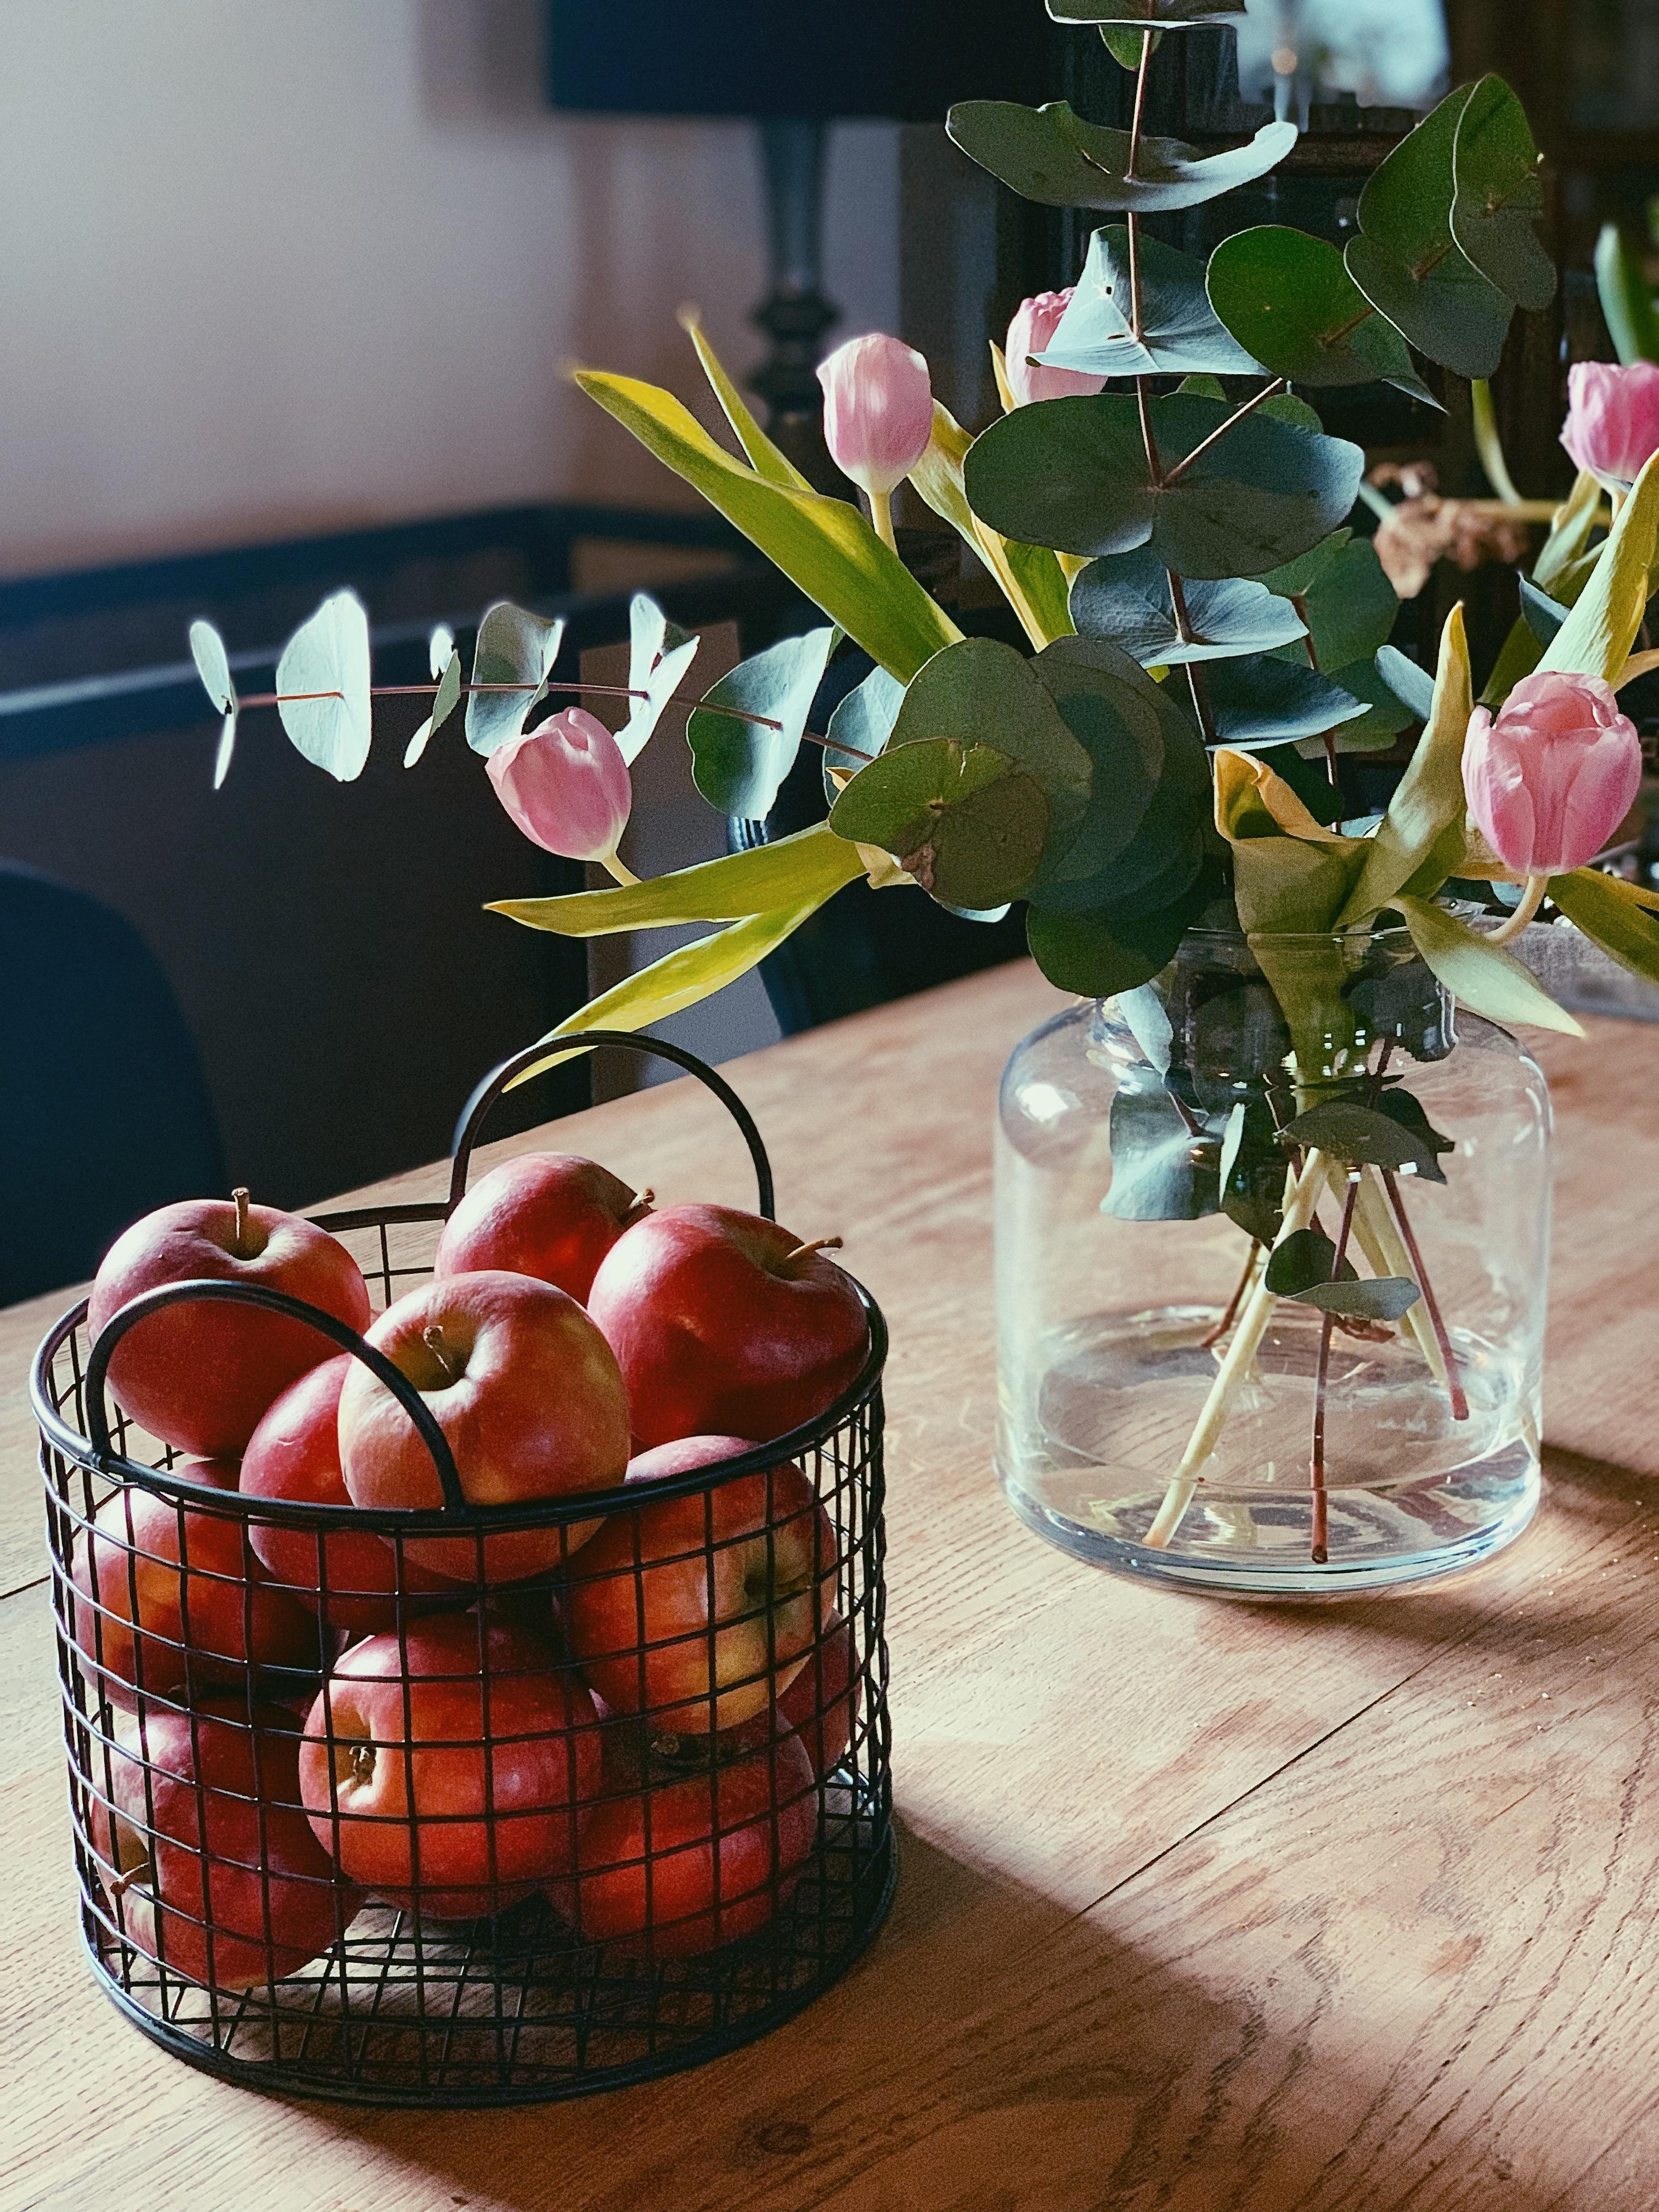 An apple a day keeps the doctor away! 🍎 #äpfel #livingroom #eukalyptus #flowers #esszimmer #drahtkorb